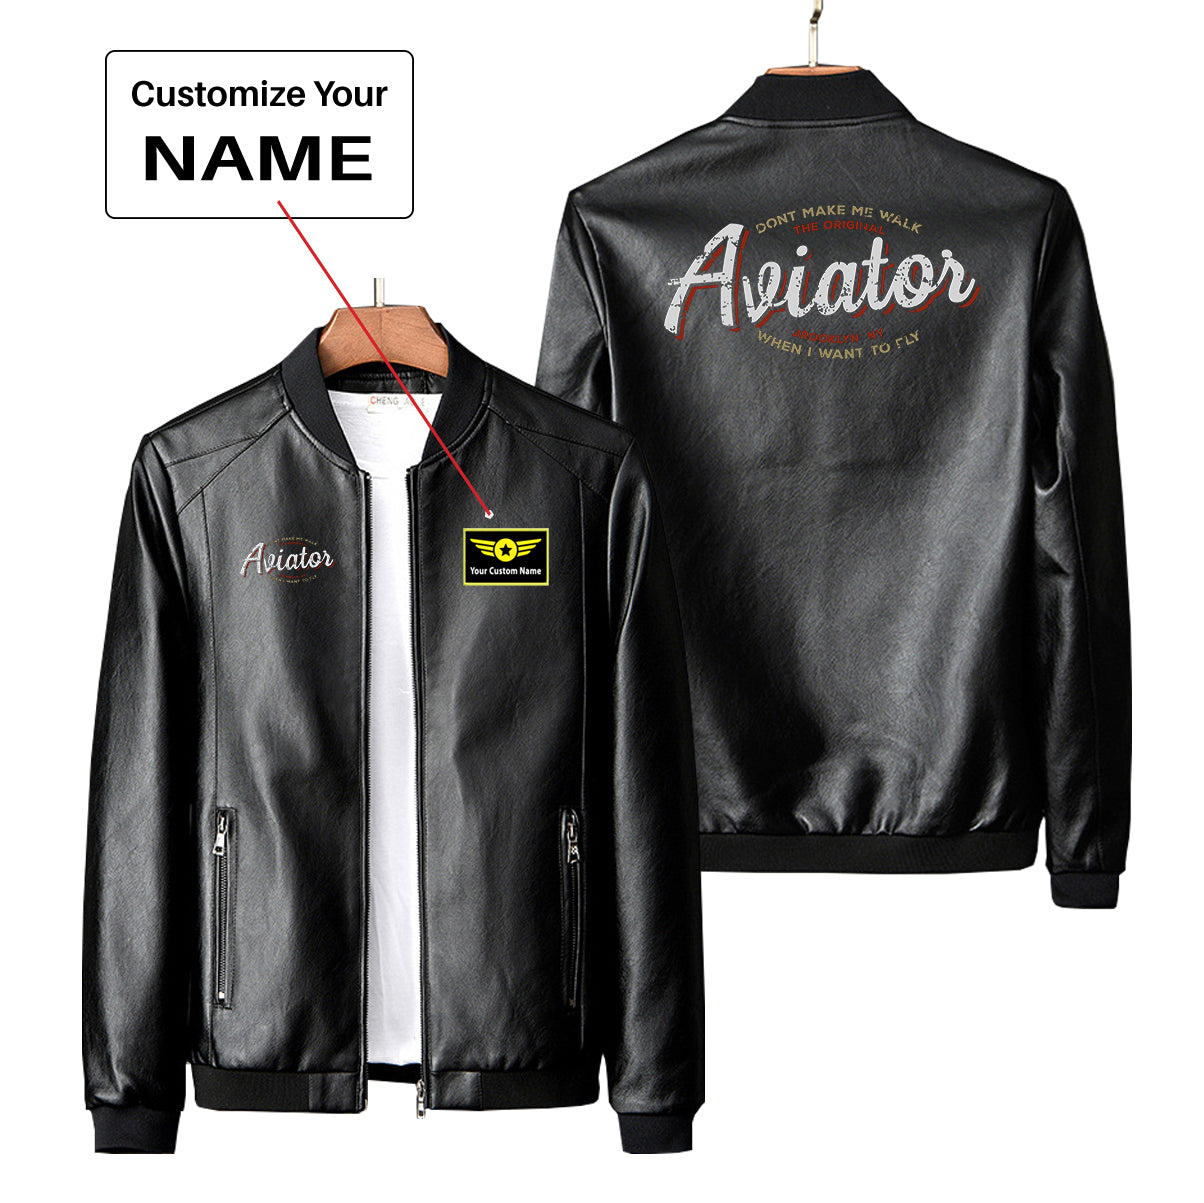 Aviator - Dont Make Me Walk Designed PU Leather Jackets